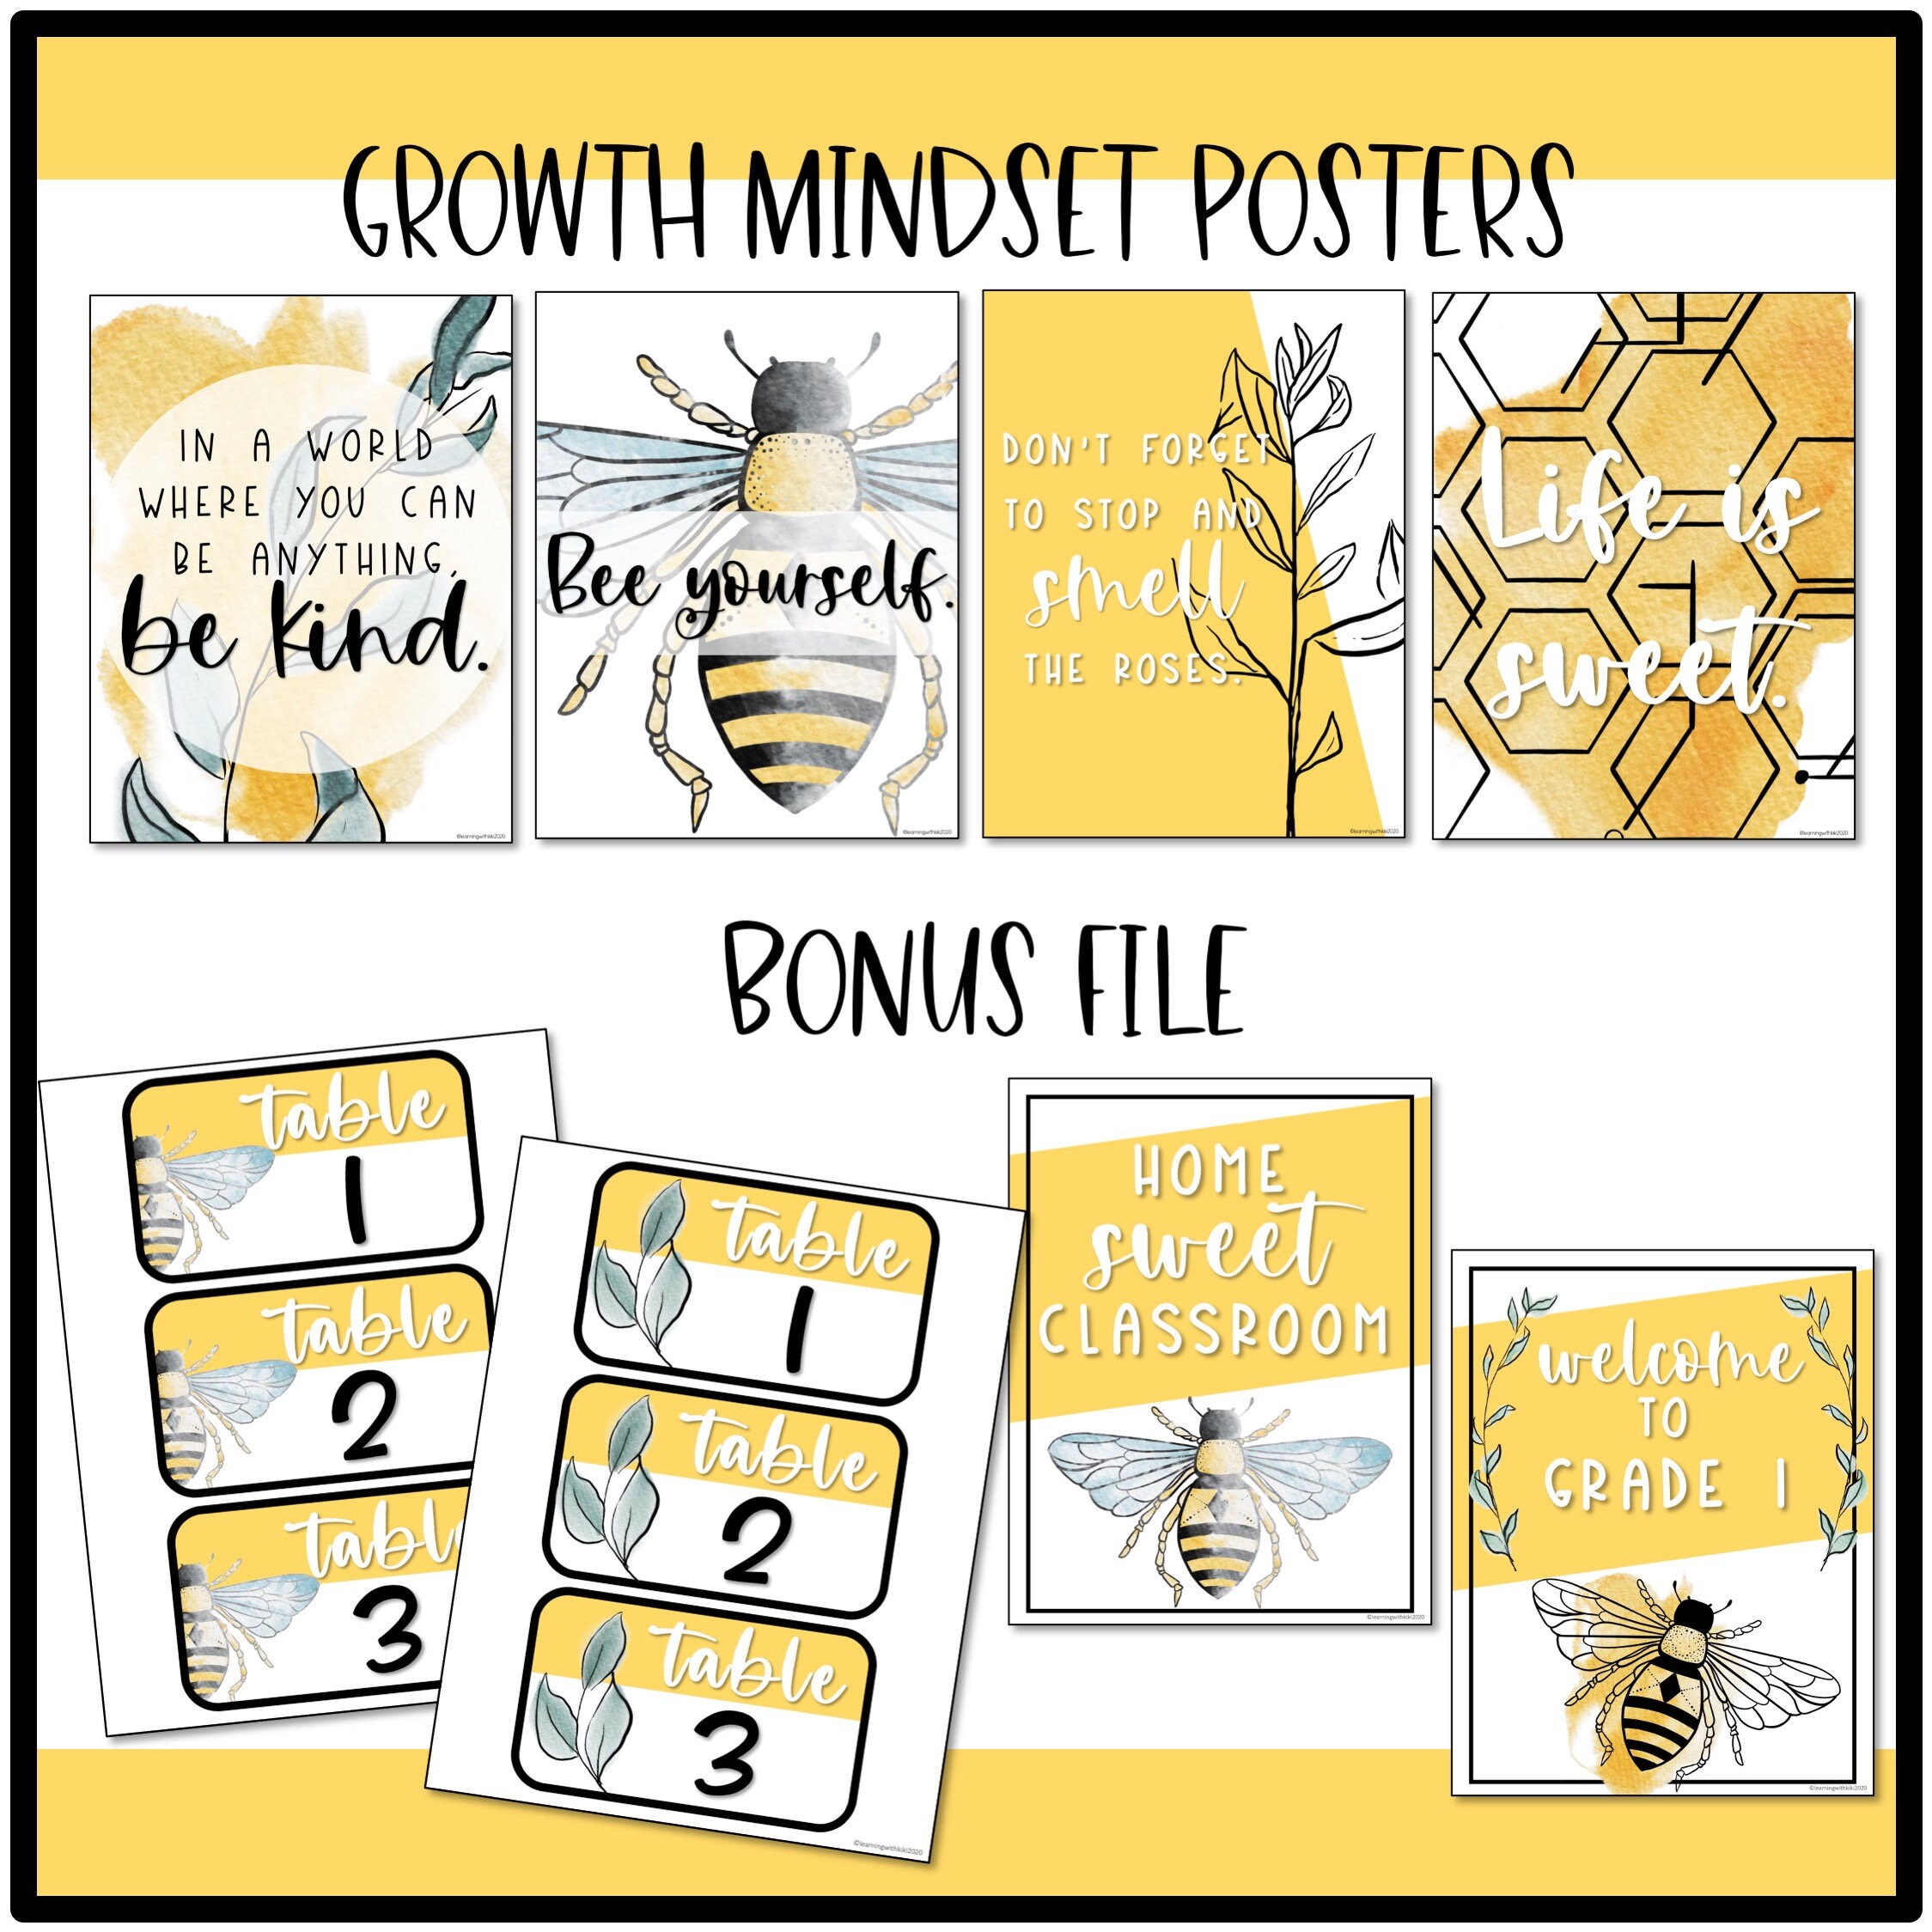 MEGA Honey Bee classroom Decor Bundle - Editable by Lisa's Classroom